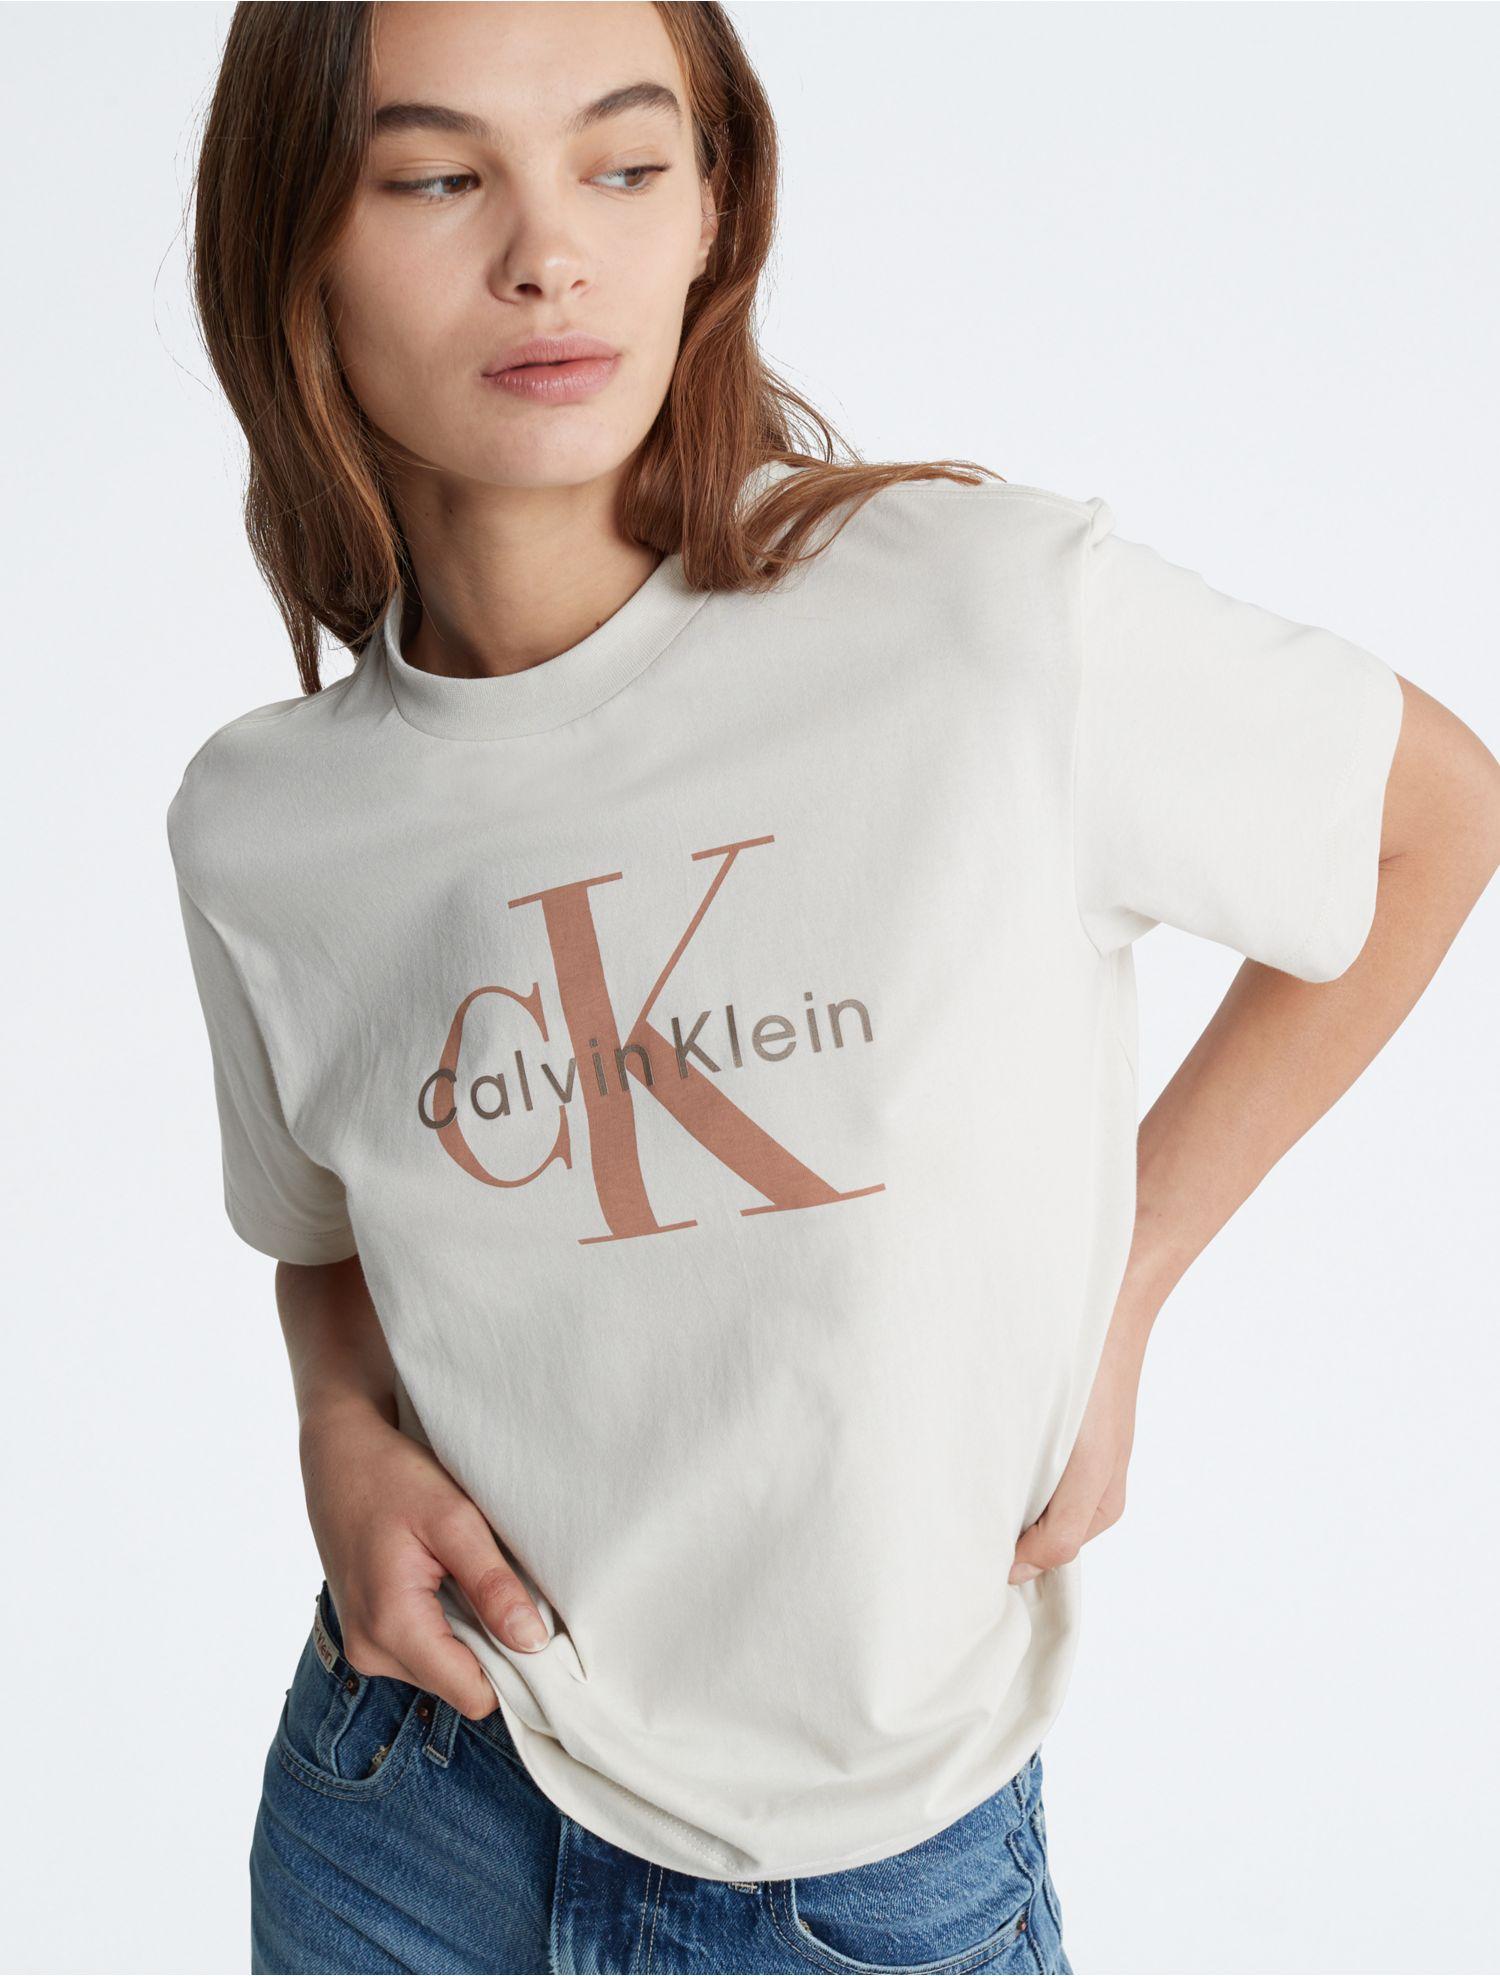 Calvin Klein in Boxy Logo | Metallic T-shirt Lyst White Crewneck Monogram